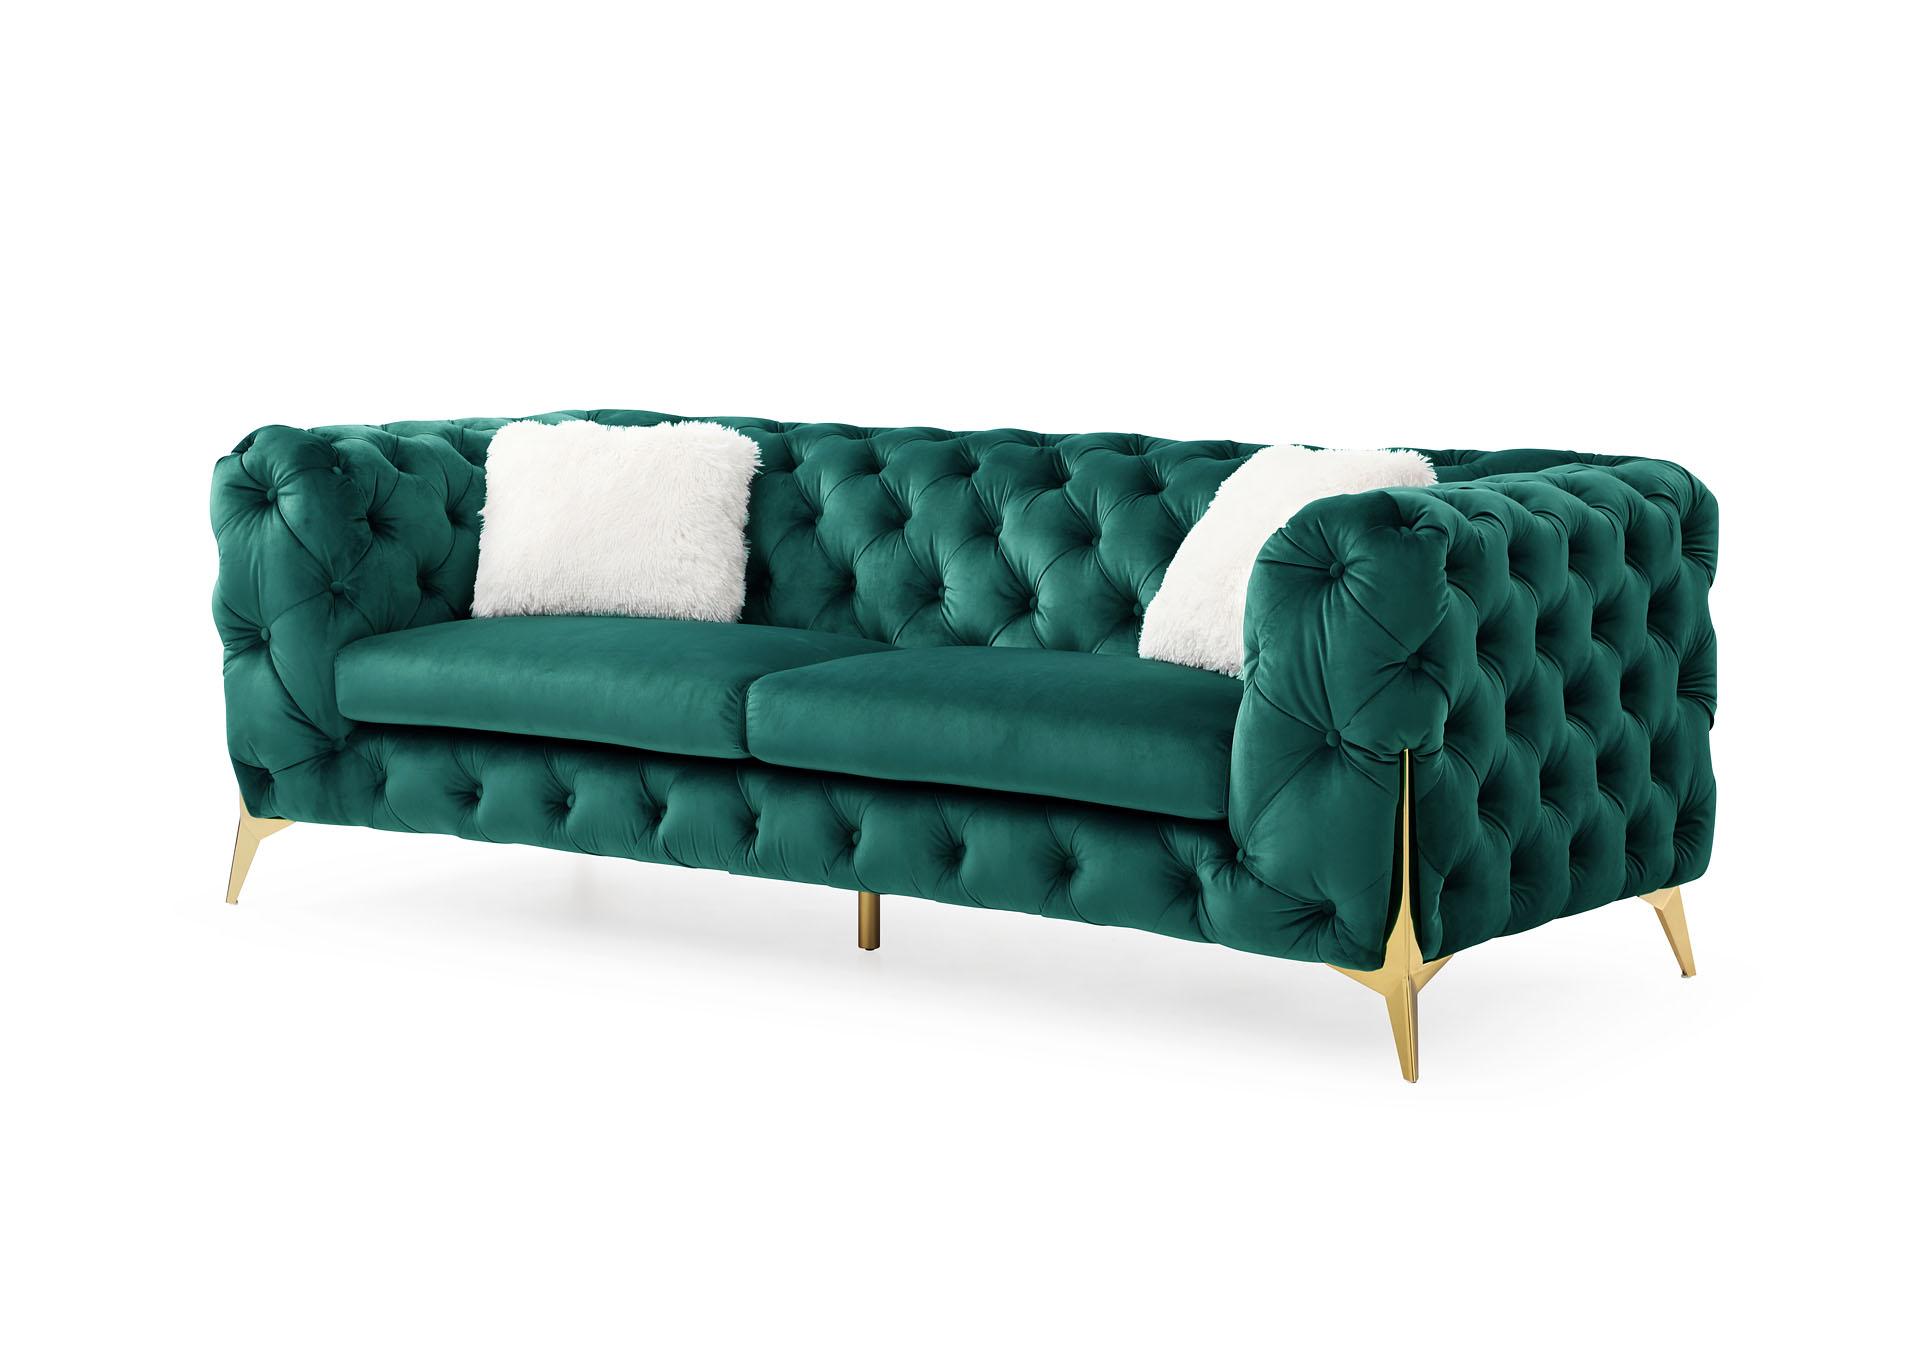 Contemporary, Modern Sofa Set MODERNO 808857961457-3PC in Green Fabric